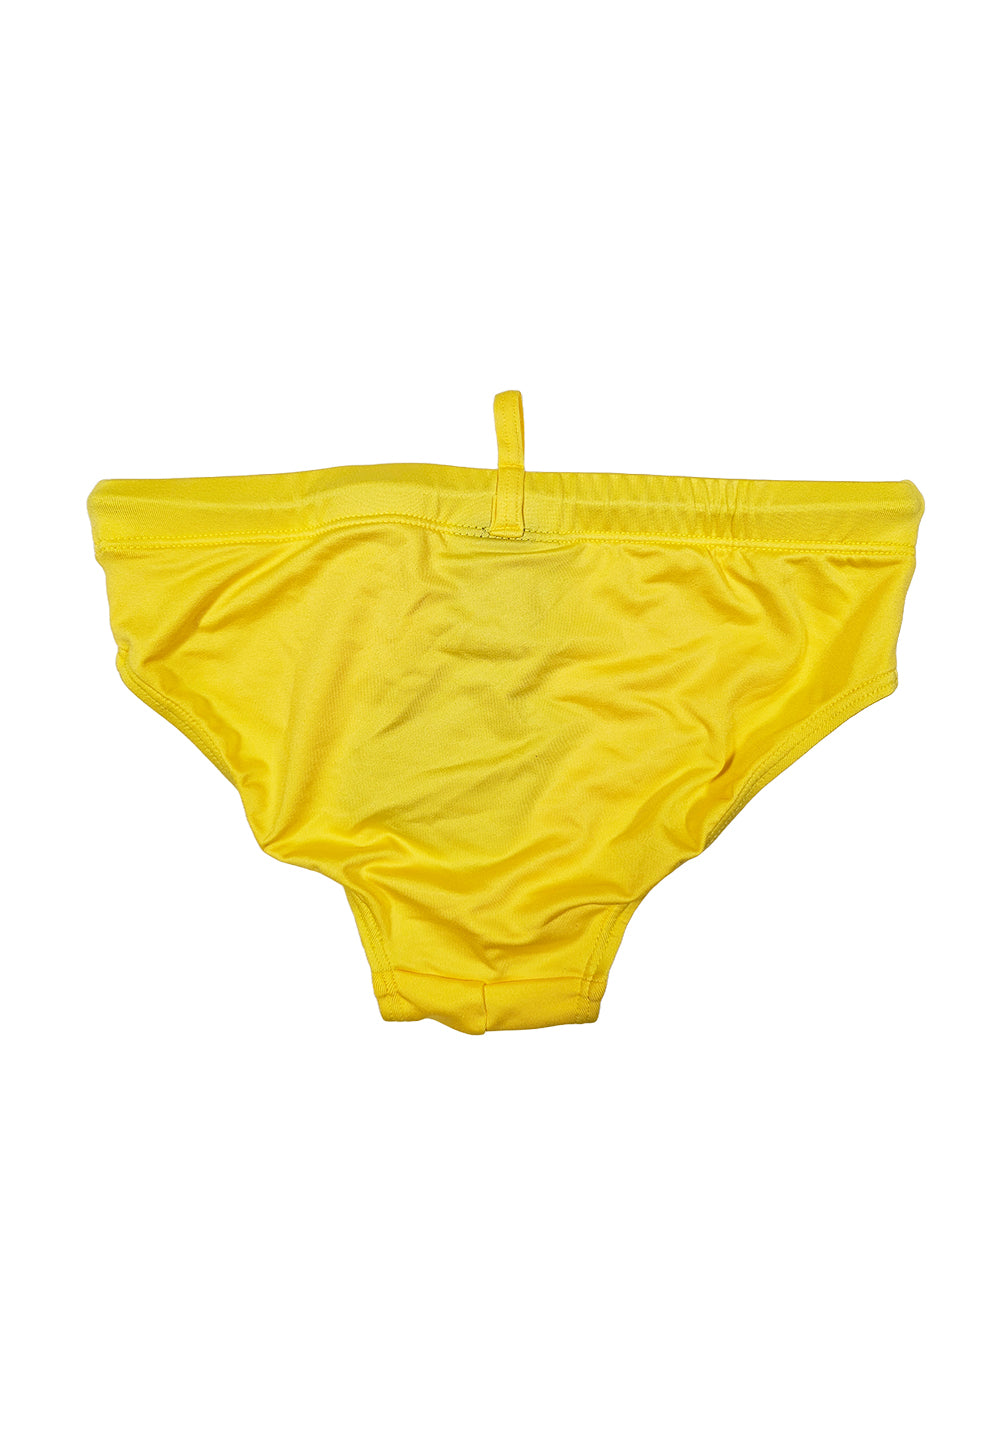 Costume slip giallo per bambino - Primamoda kids